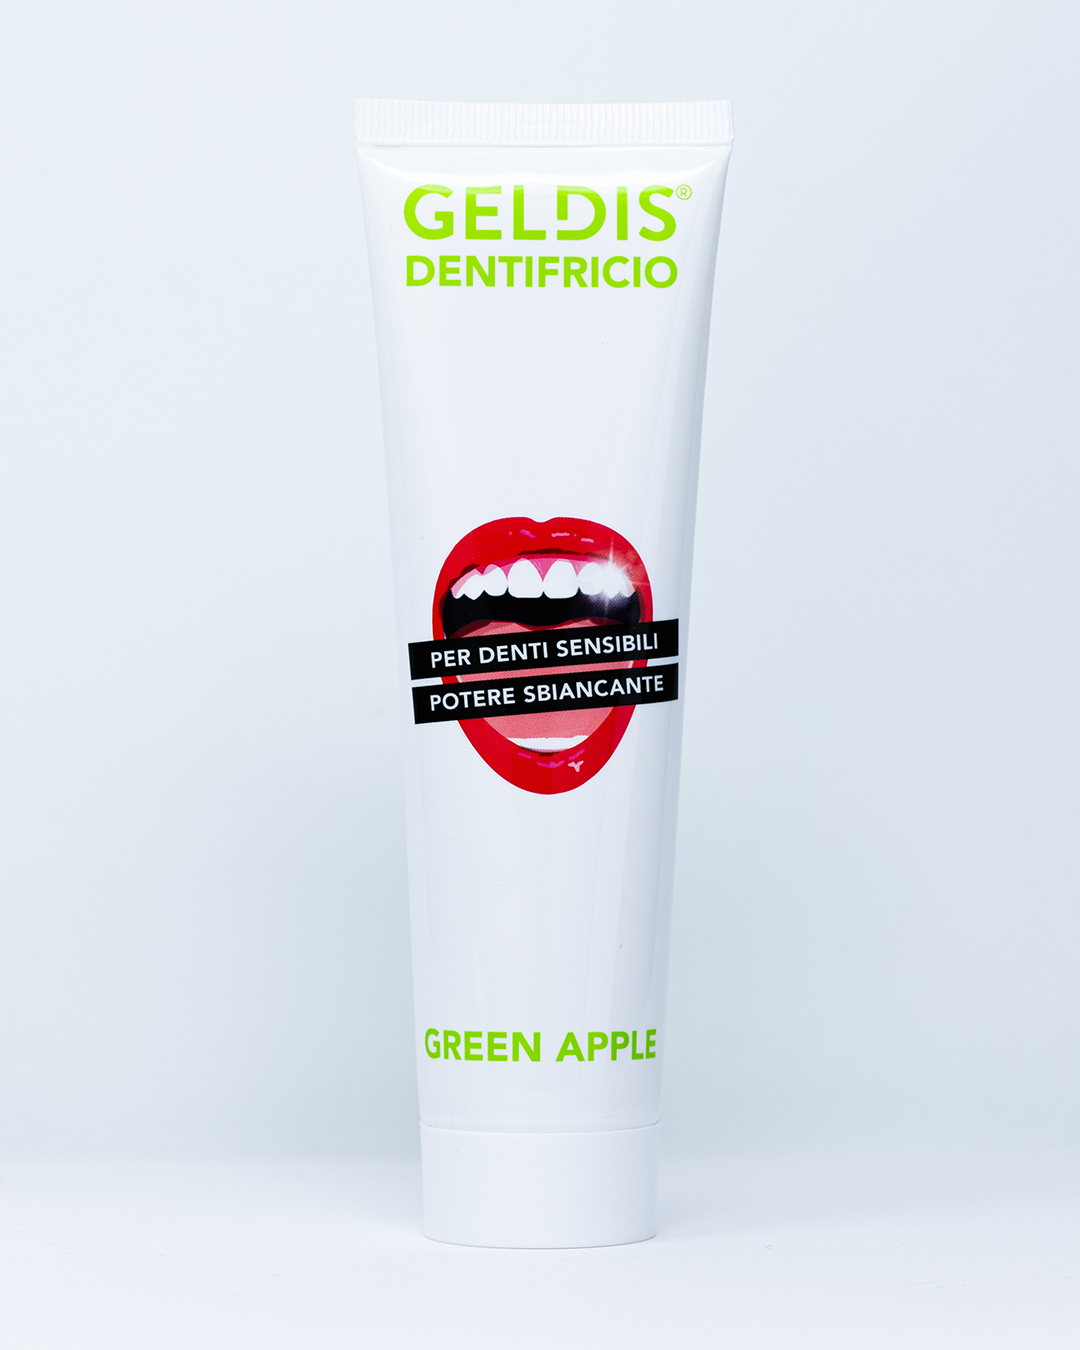 Geldis Dentifricio Sbiancante per Denti Sensibili alla Mela Verde - 100 ml